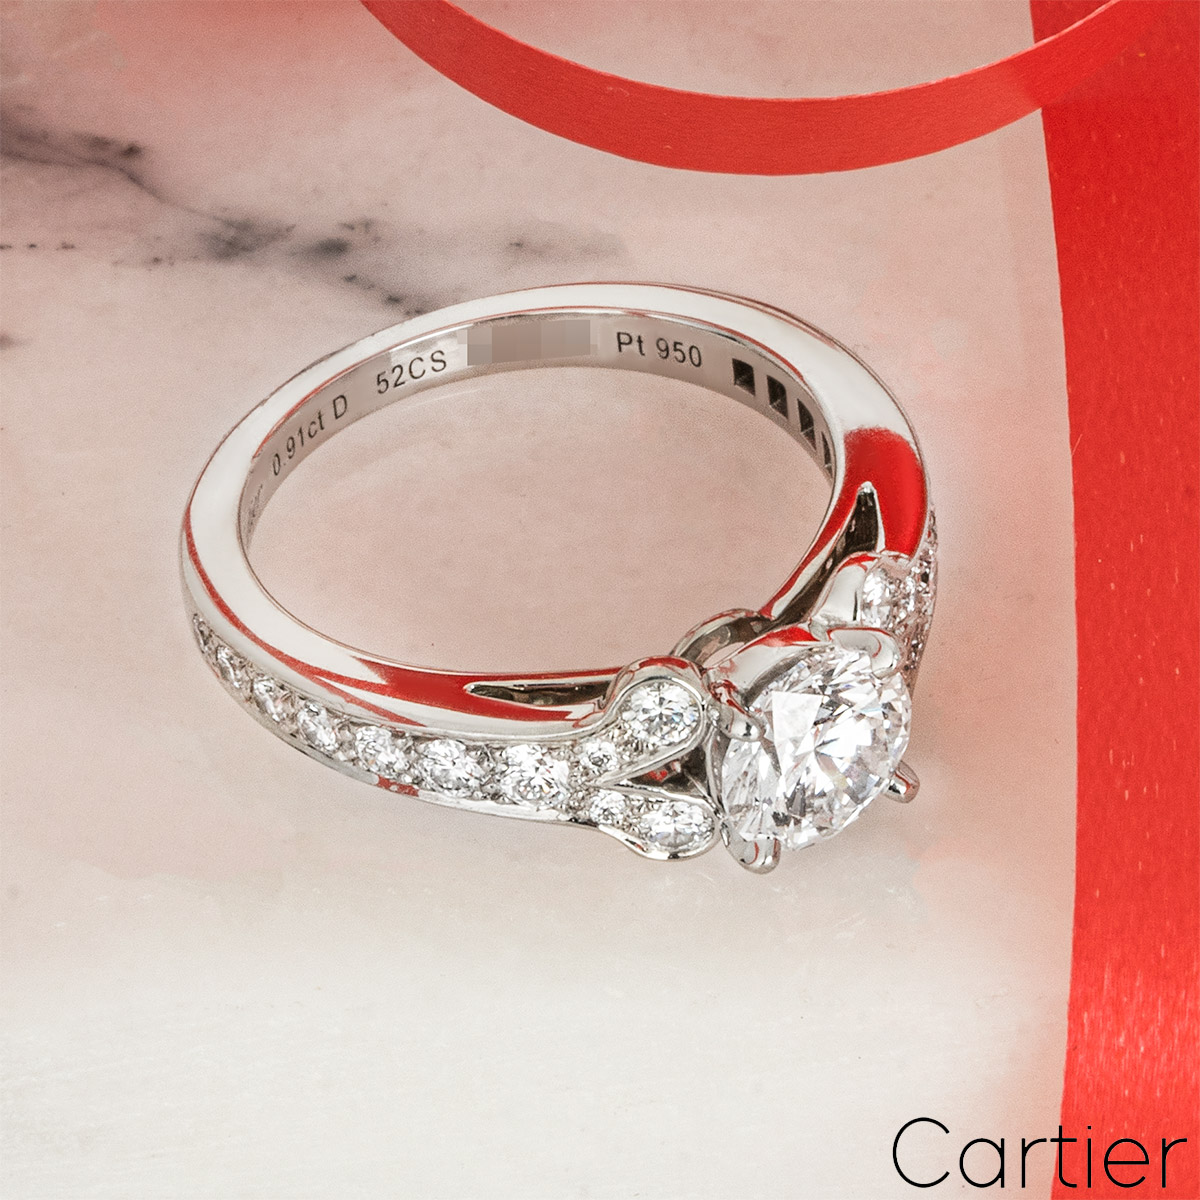 Cartier Platinum Round Brilliant Cut Diamond Ballerine Solitaire Ring 0.91ct D/IF XXX